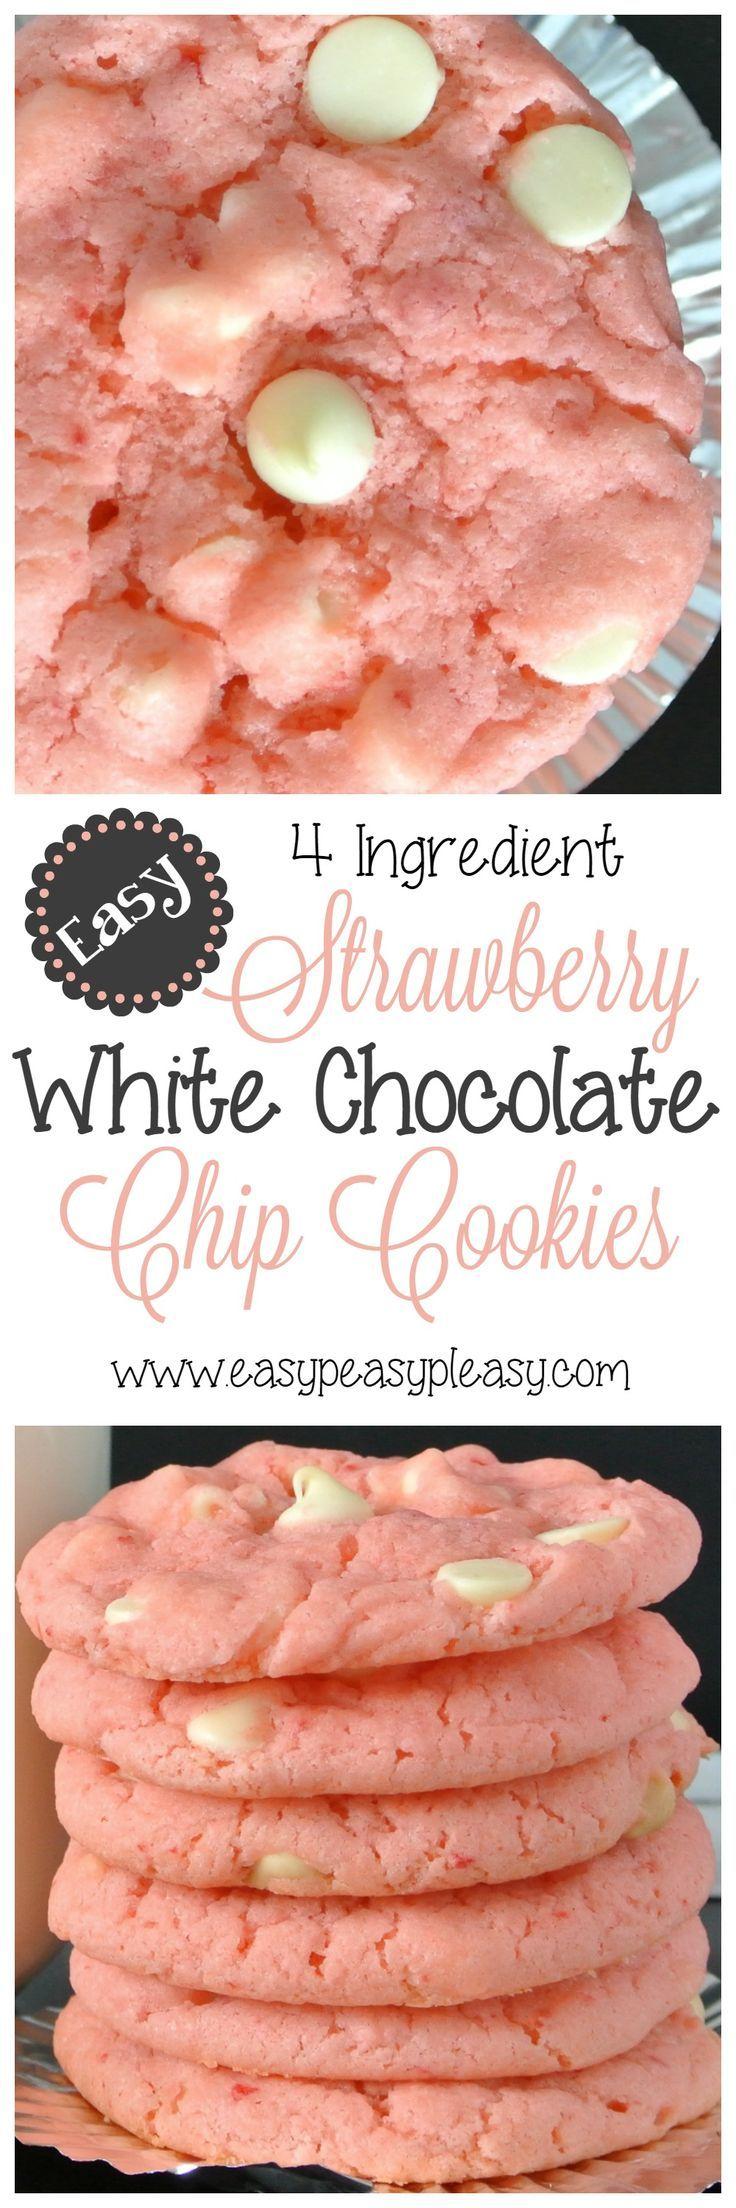 Wedding - 4 Ingredient Strawberry White Chocolate Chip Cookies